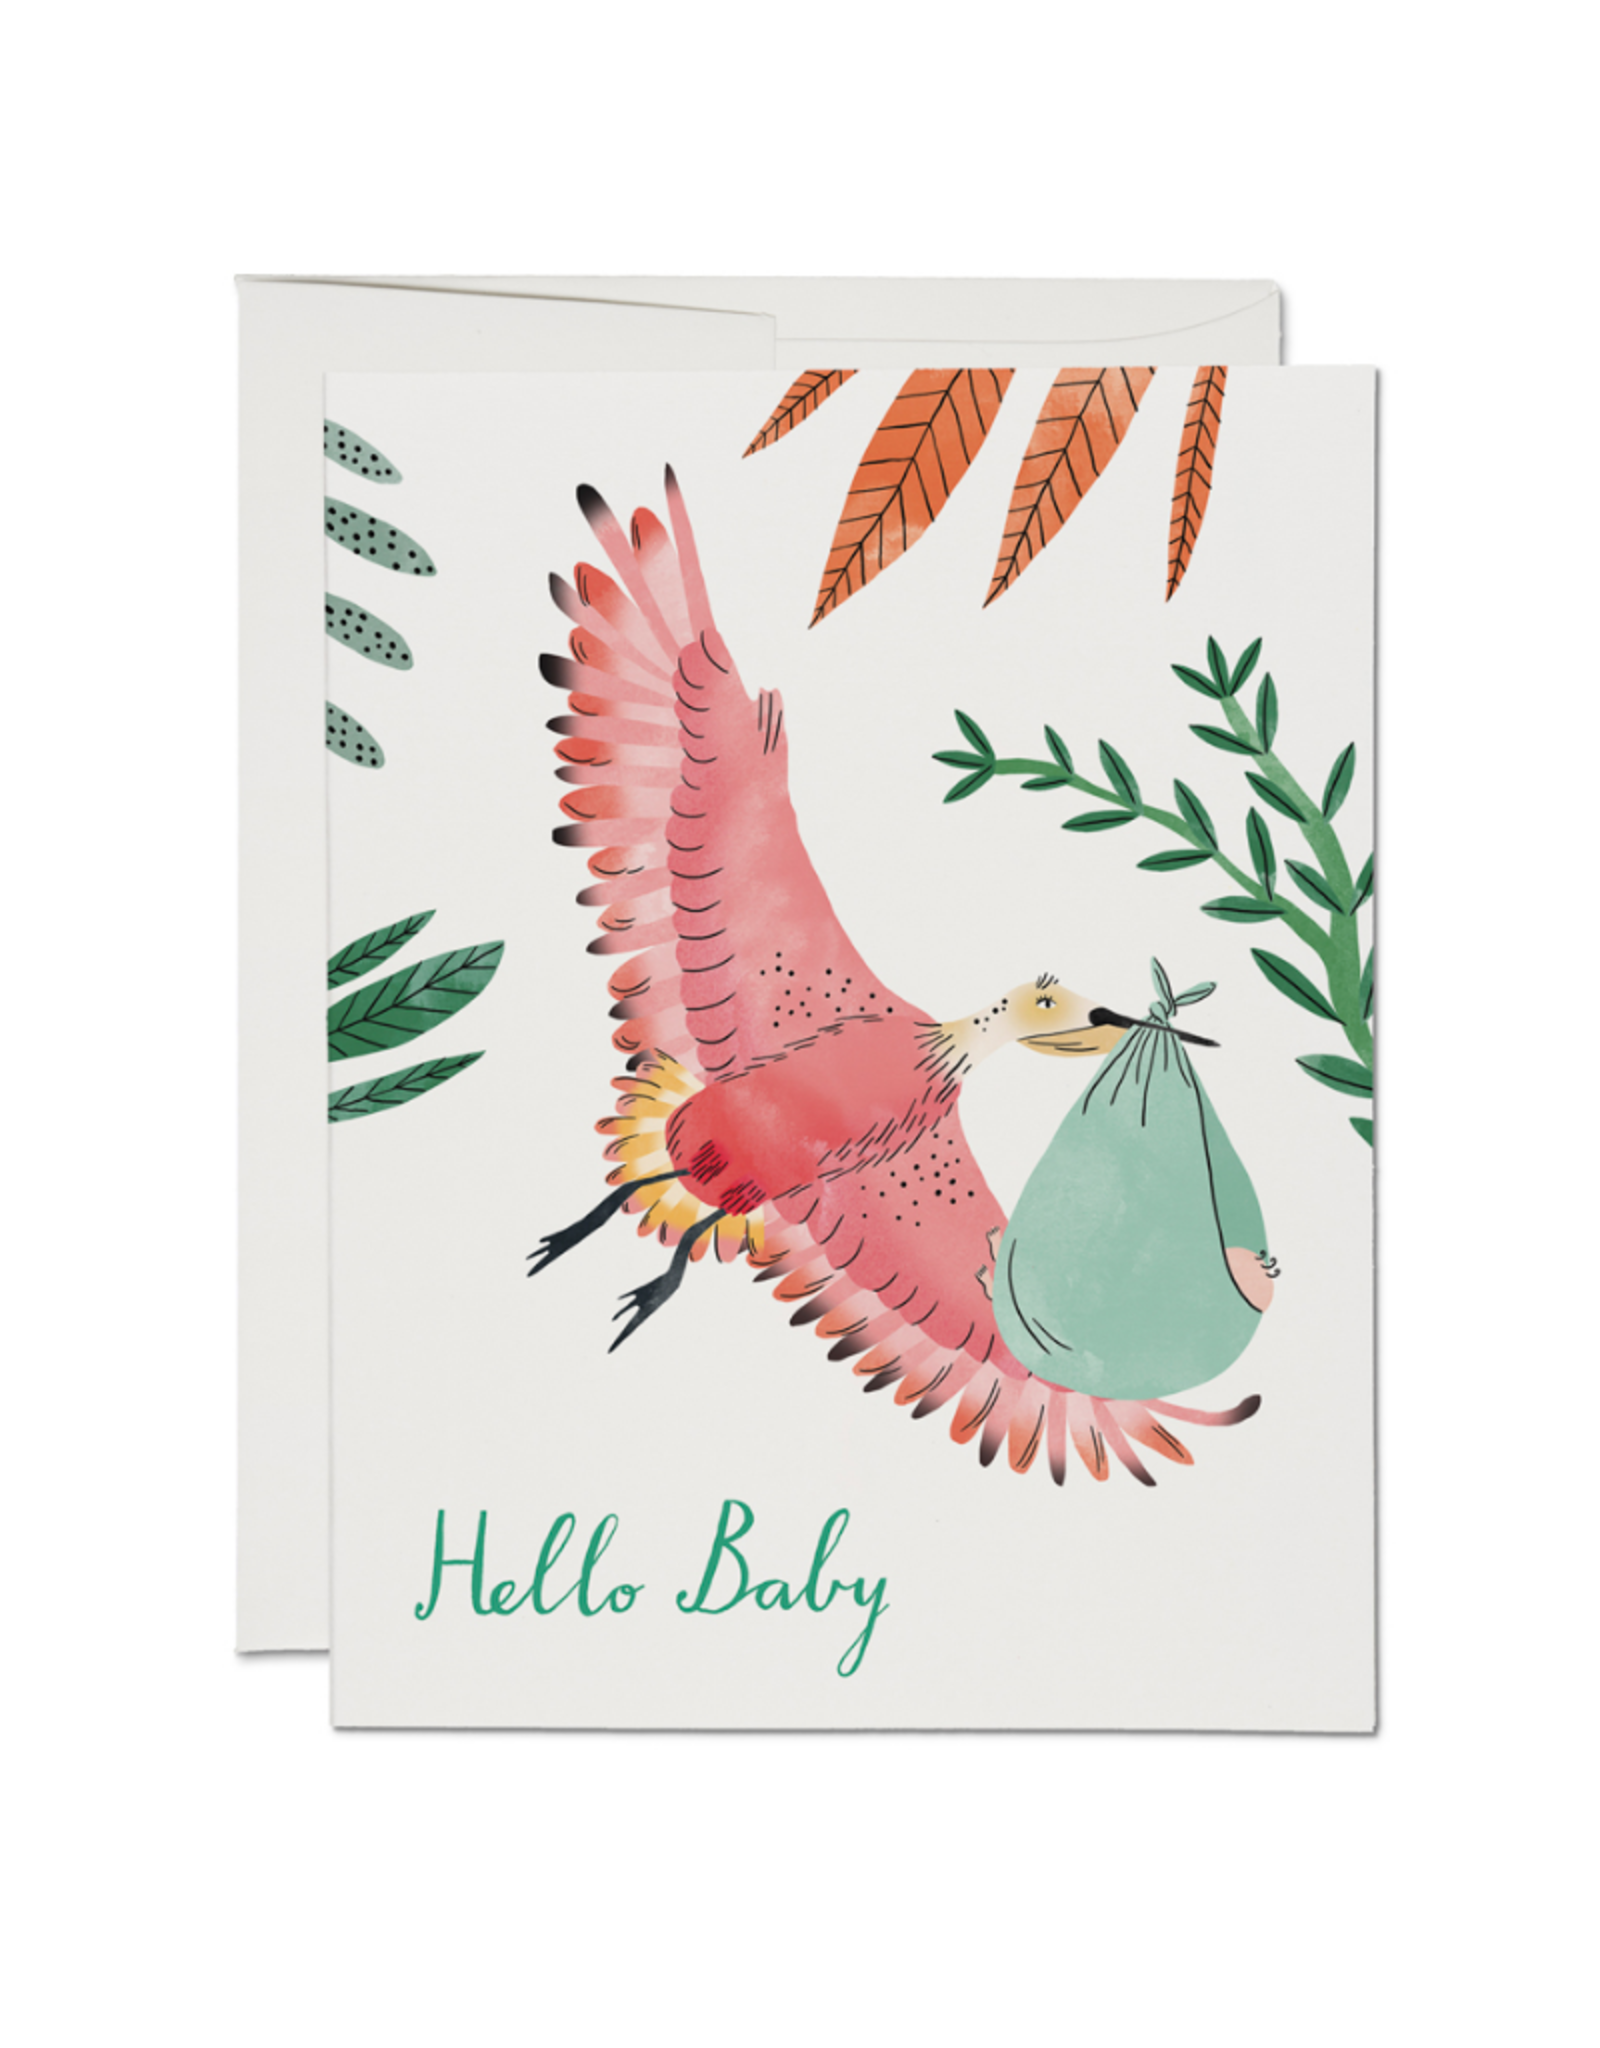 Bird with Baby Card